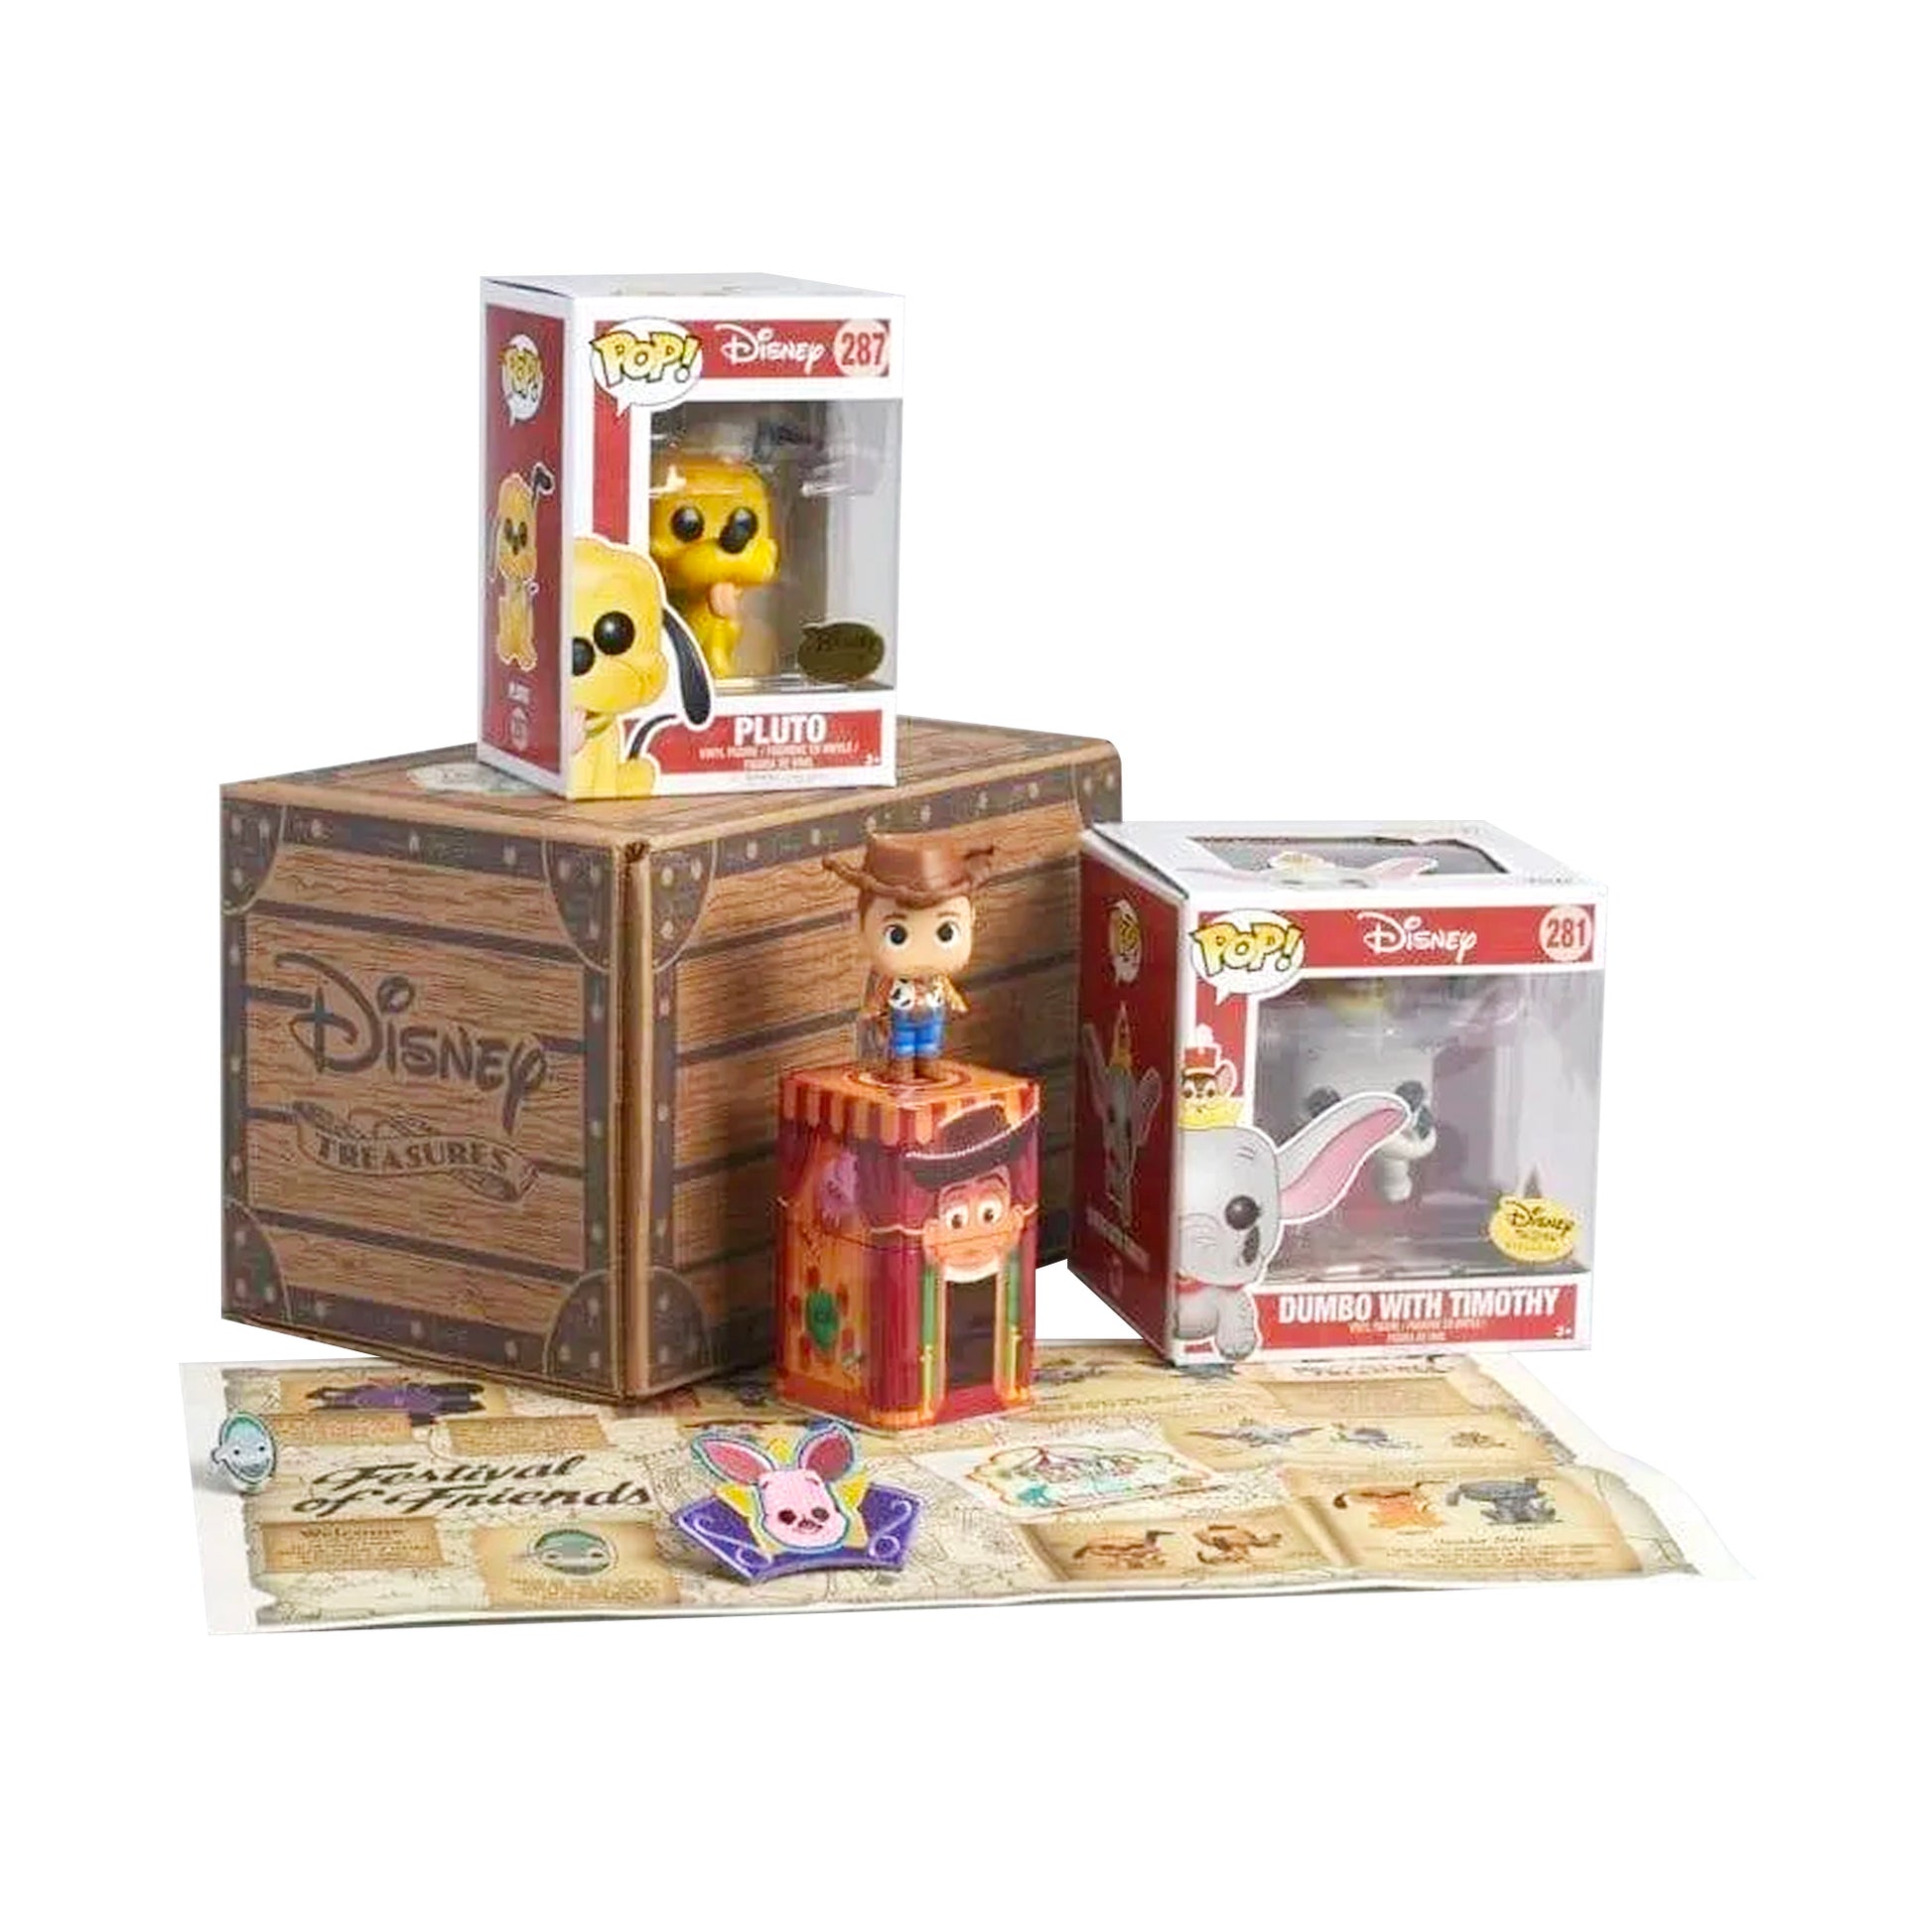 Pop and Set Pluto Disney: TOY Funko TOKYO – Treasure - Box Pop! Dumbo